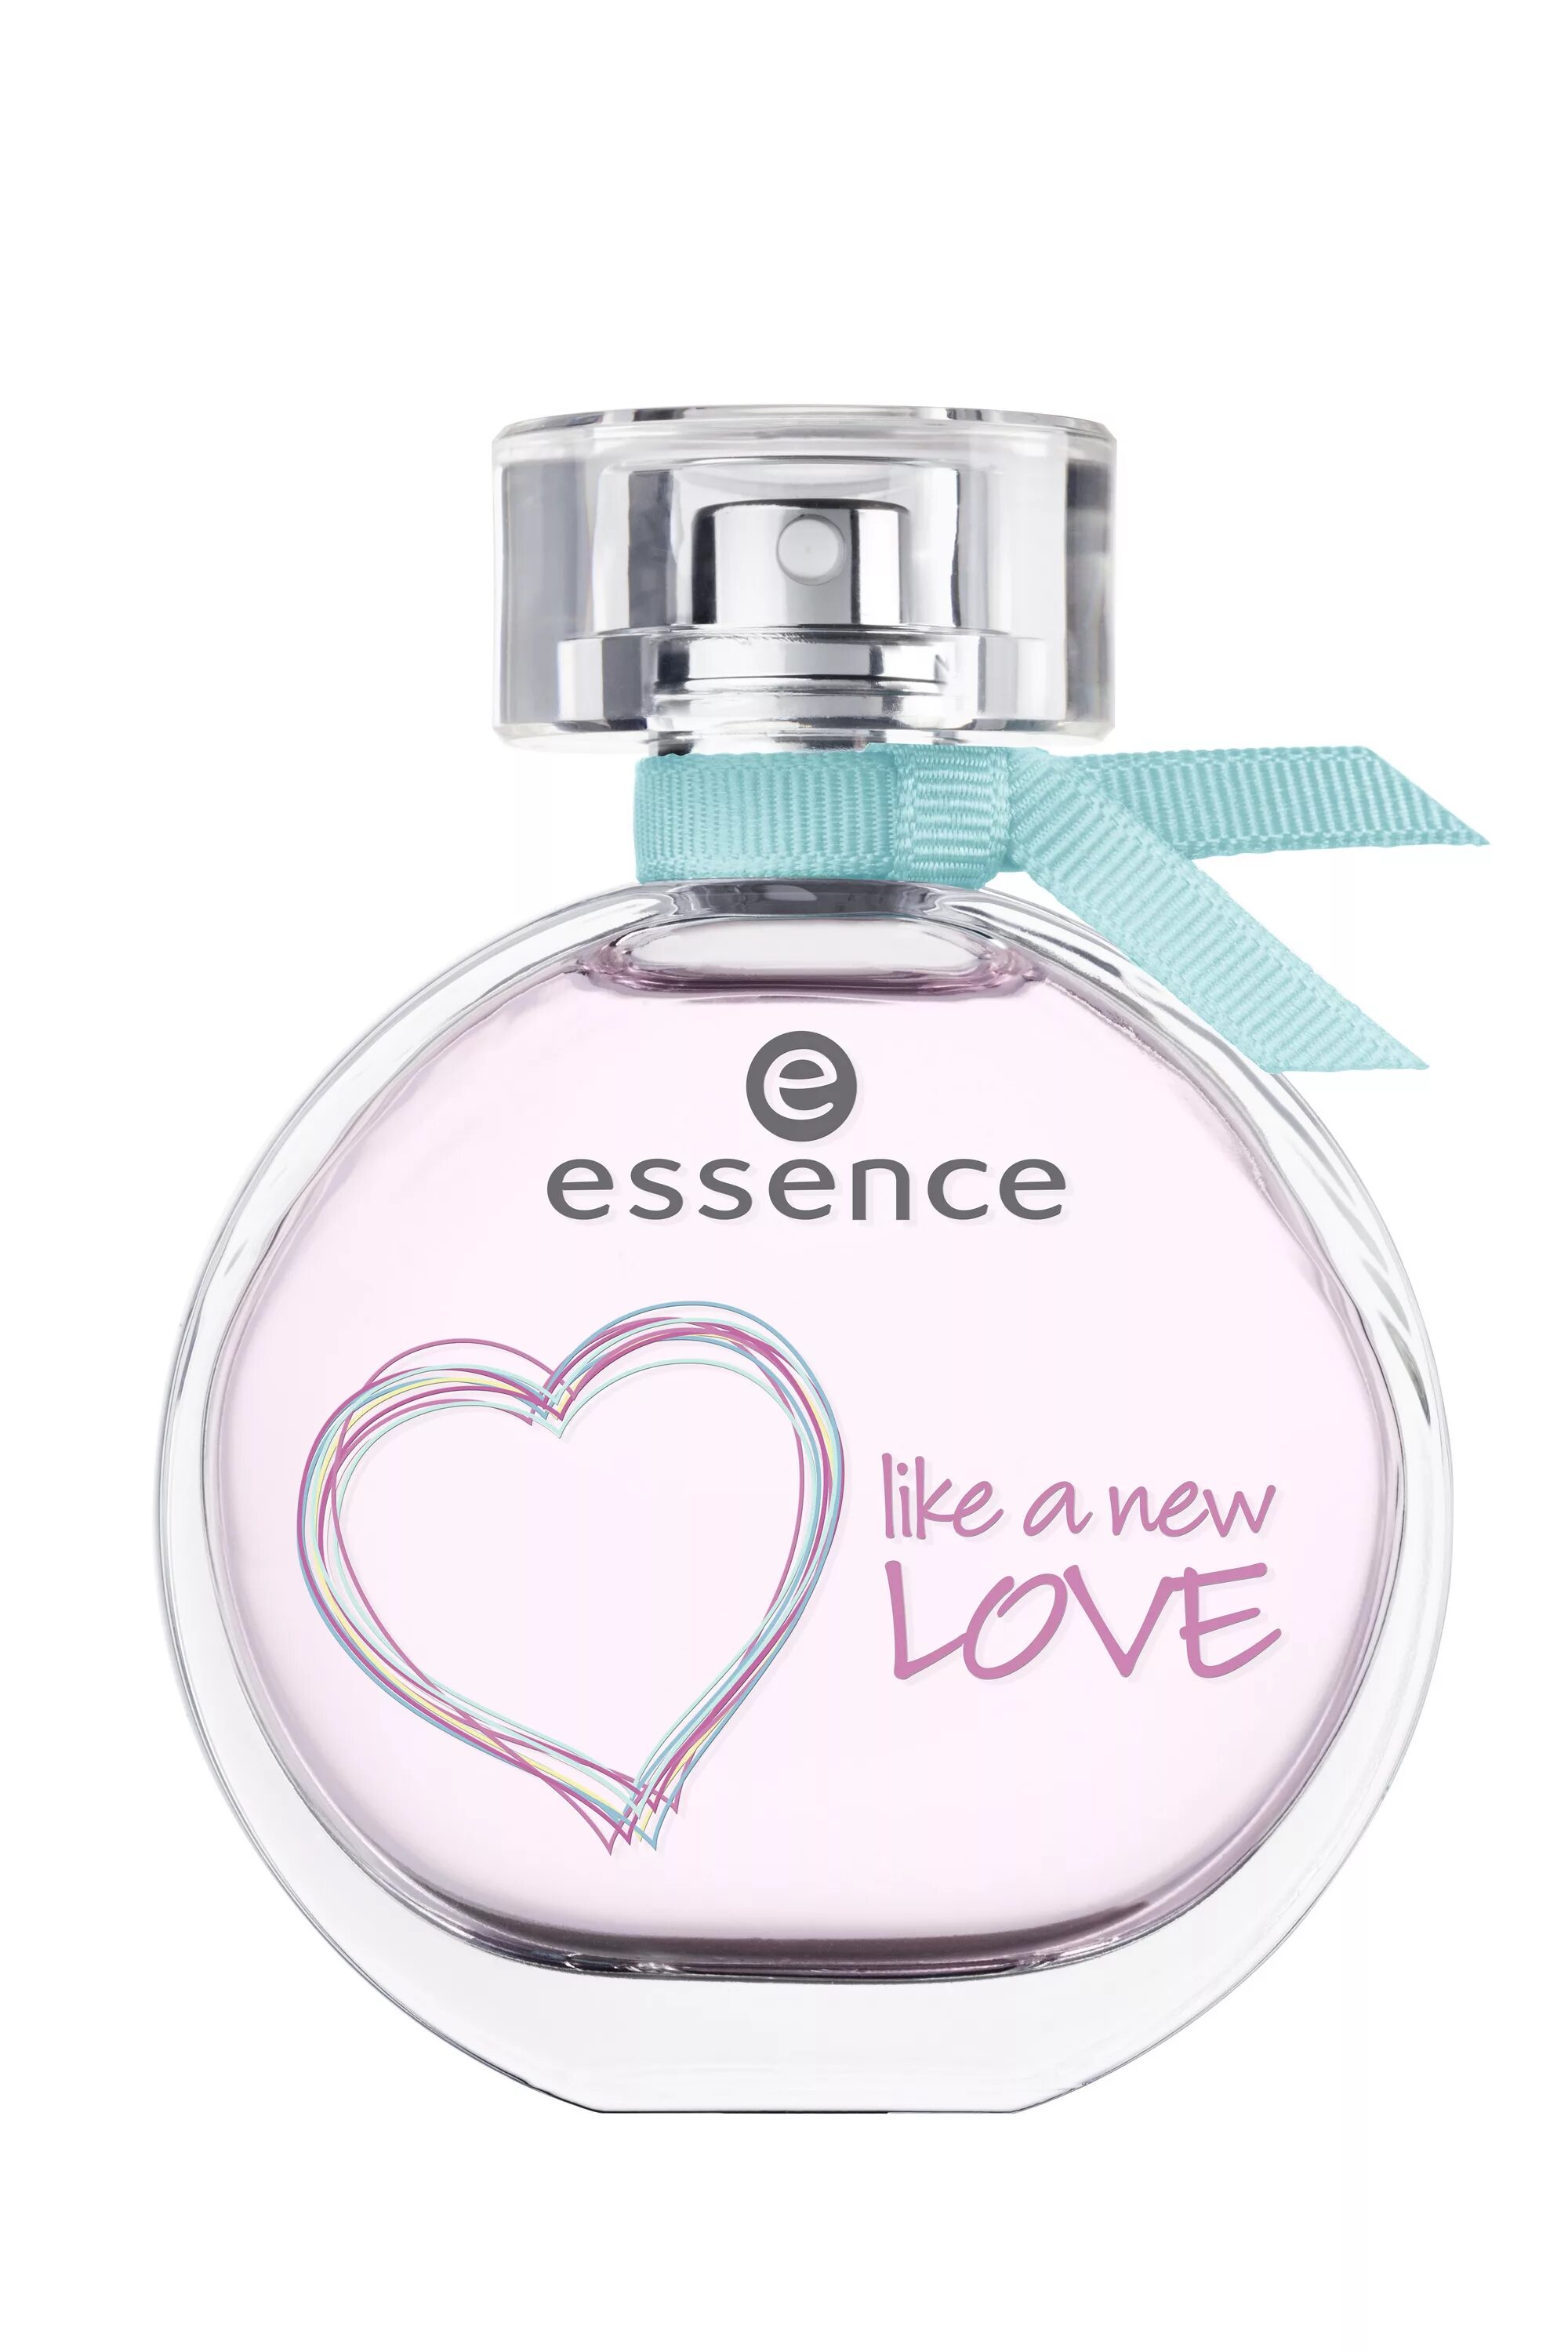 Essence Парфюм. Я люблю Эссенс. Essence for Perfume. Духи Lovely.